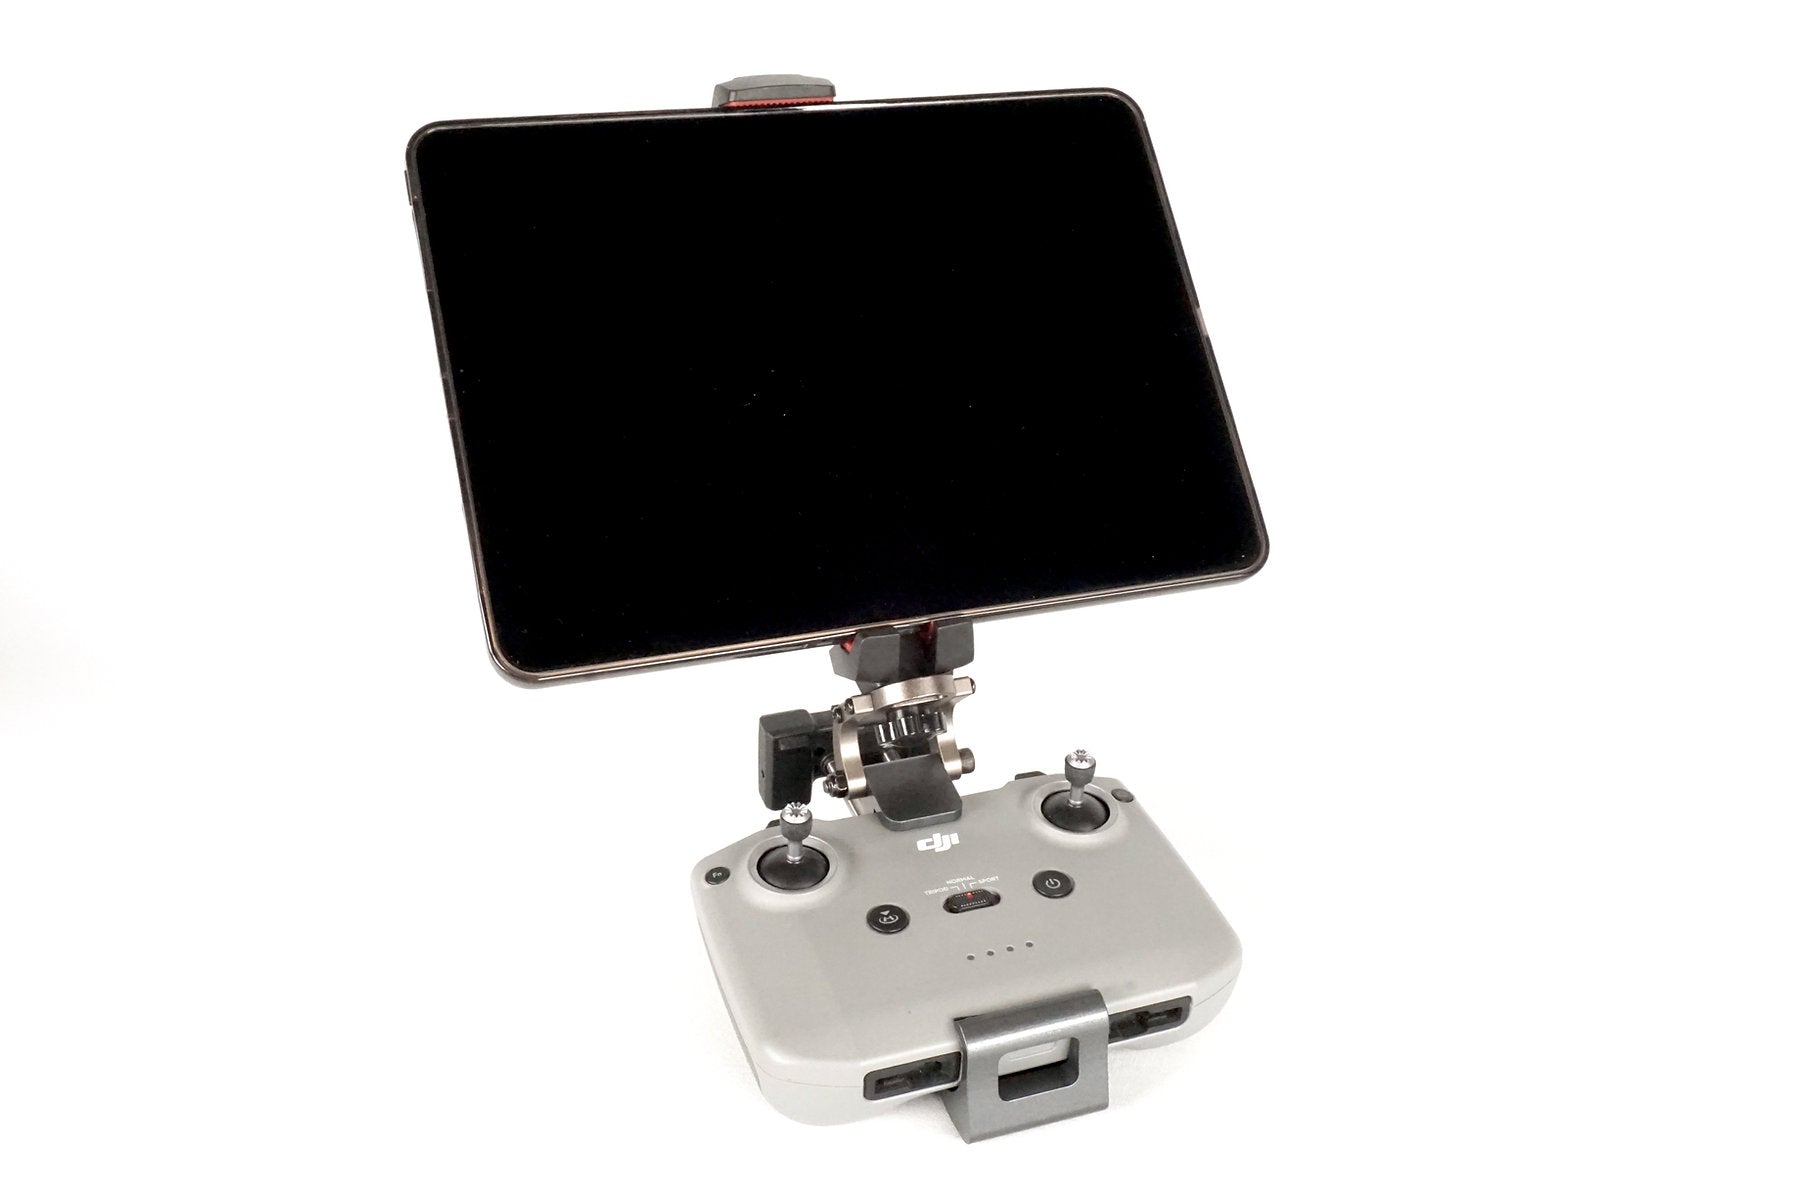 LifThor Baldur 2 Tablet Mount Combo for DJI RC-N1 - Cloud City Drones